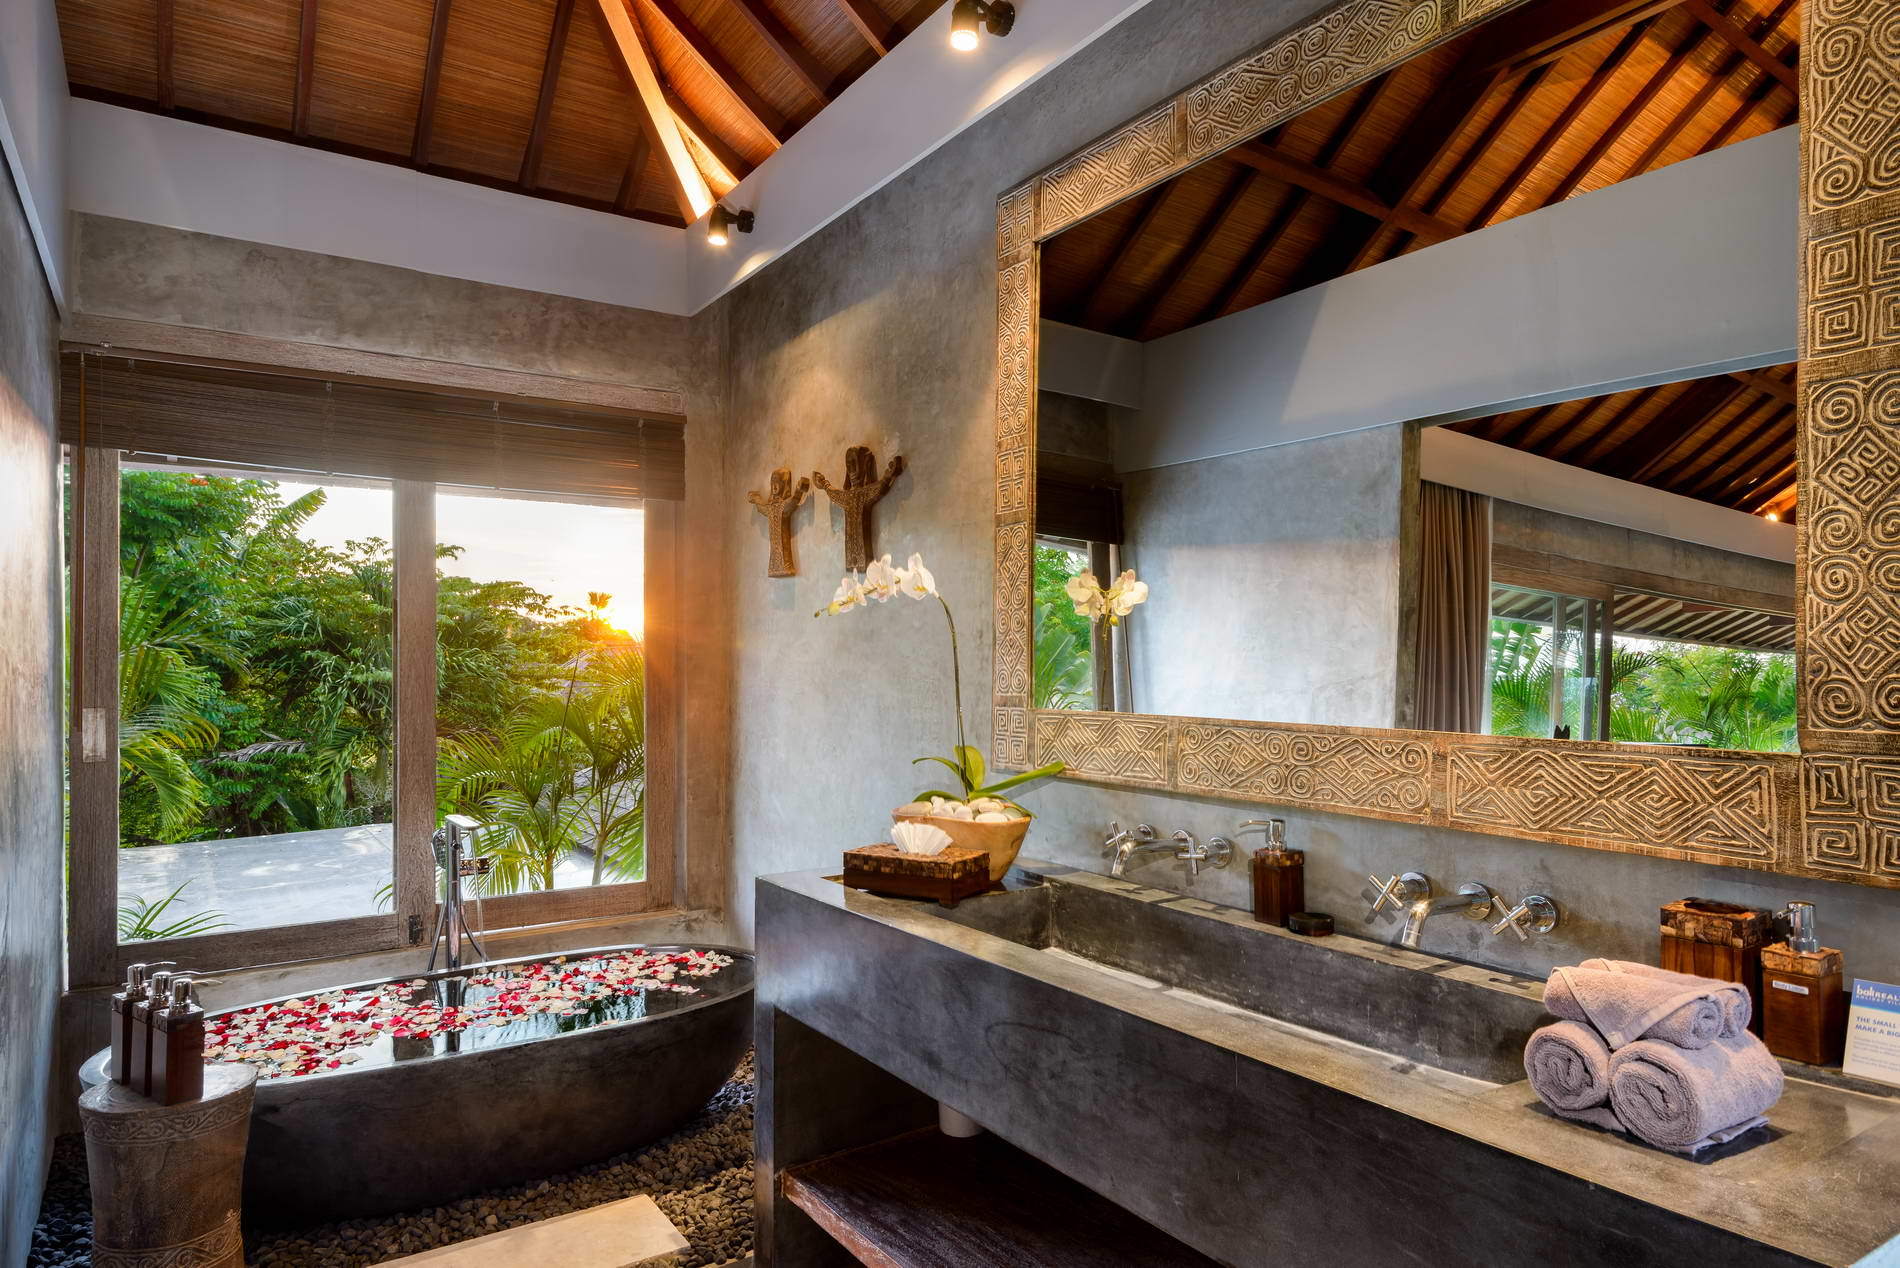 Ванная комната Балли в стиле Бали. Бали виллы интерьер Bali. Дизайн Балли в стиле Бали. Индонезия Бали интерьер. Бали стиль